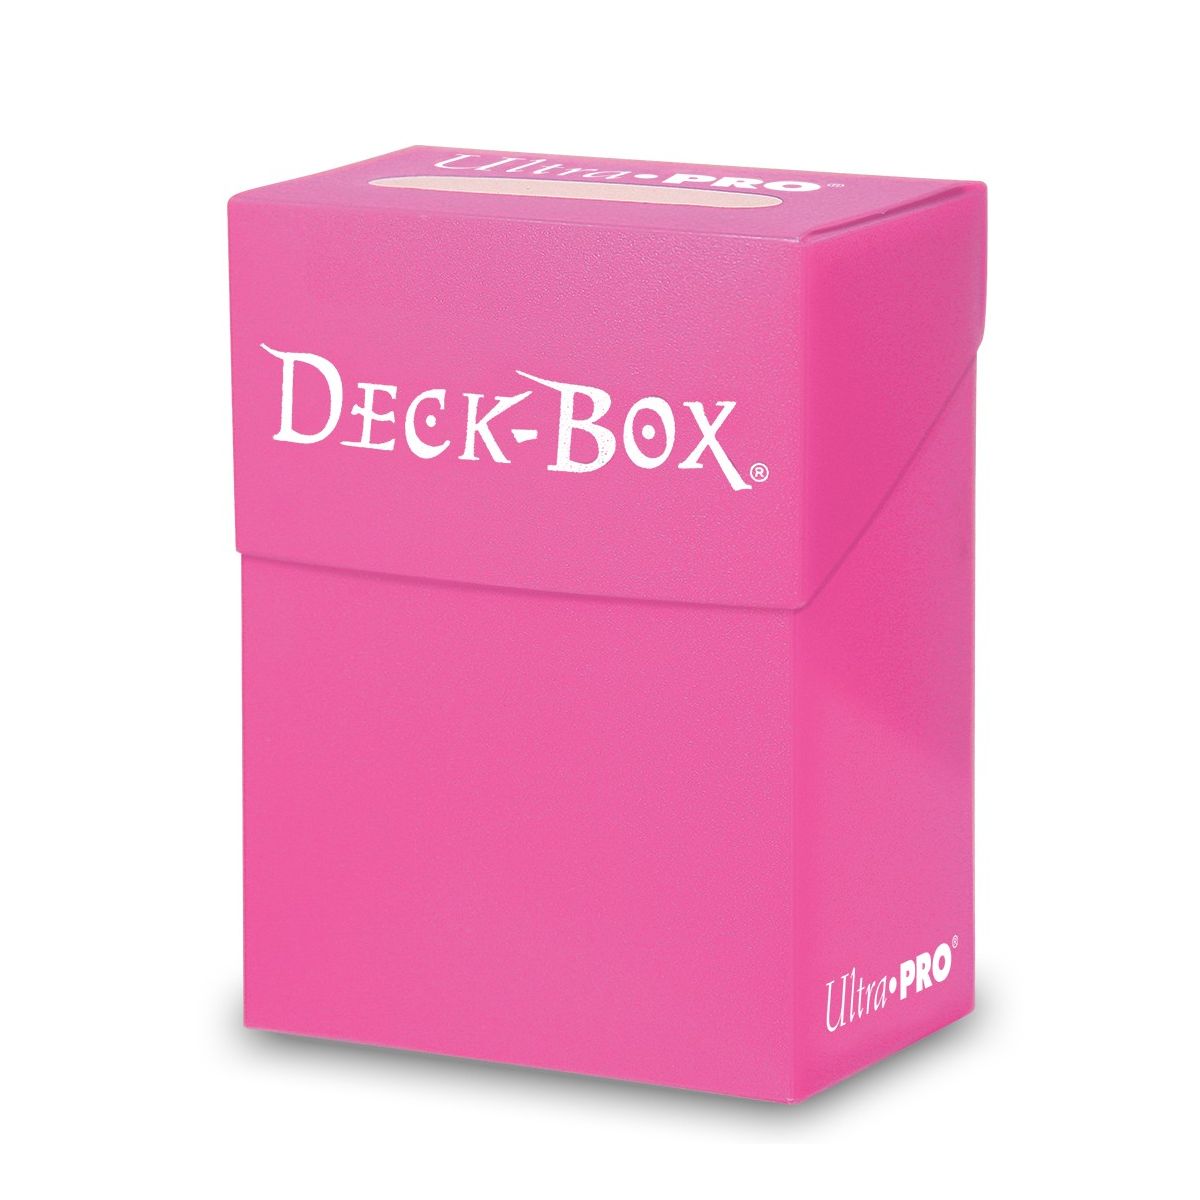 Deck Box Solid - Rose Vif